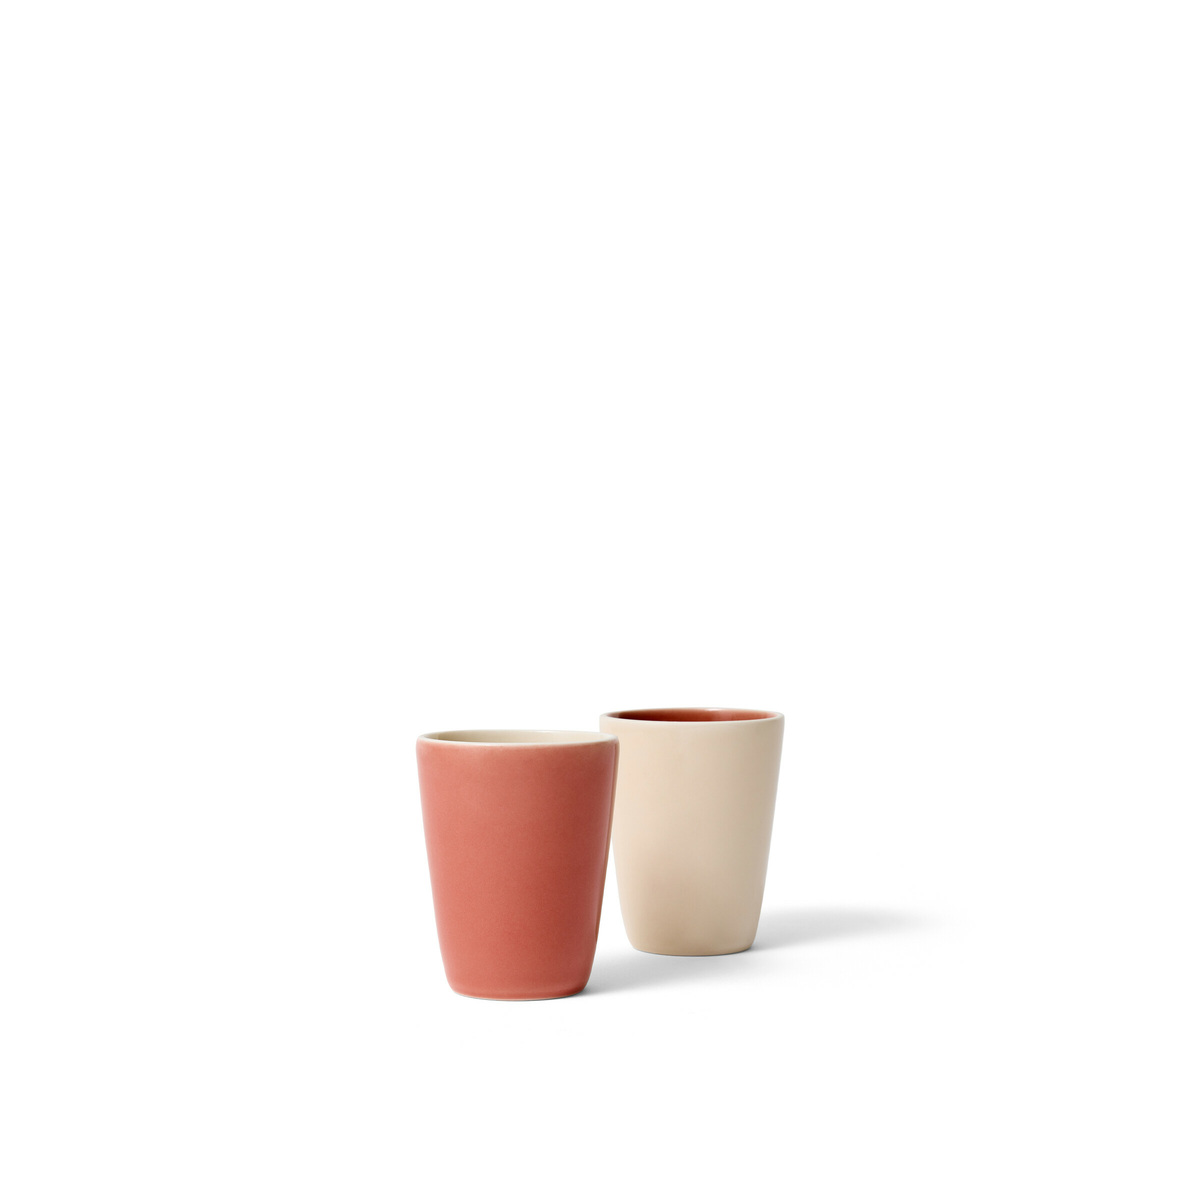 Sicilia Double Set Cups, Rosewood / Off-White - Ceramic - image 1